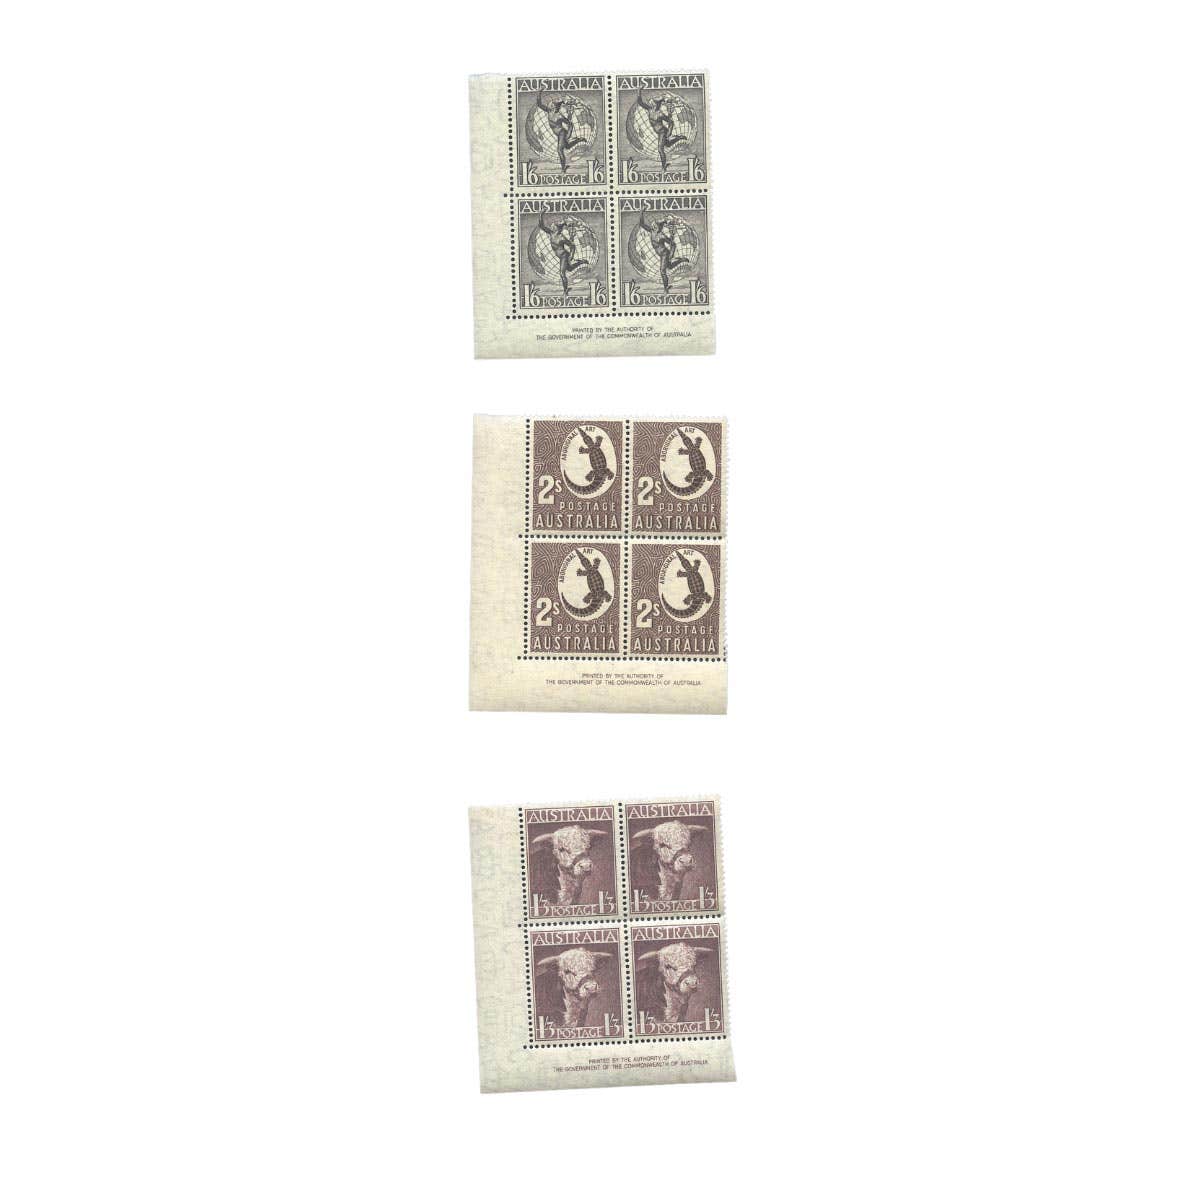 1948-49 High Value Pictorials Authority Imprint Block of Four Set of 3 MUH